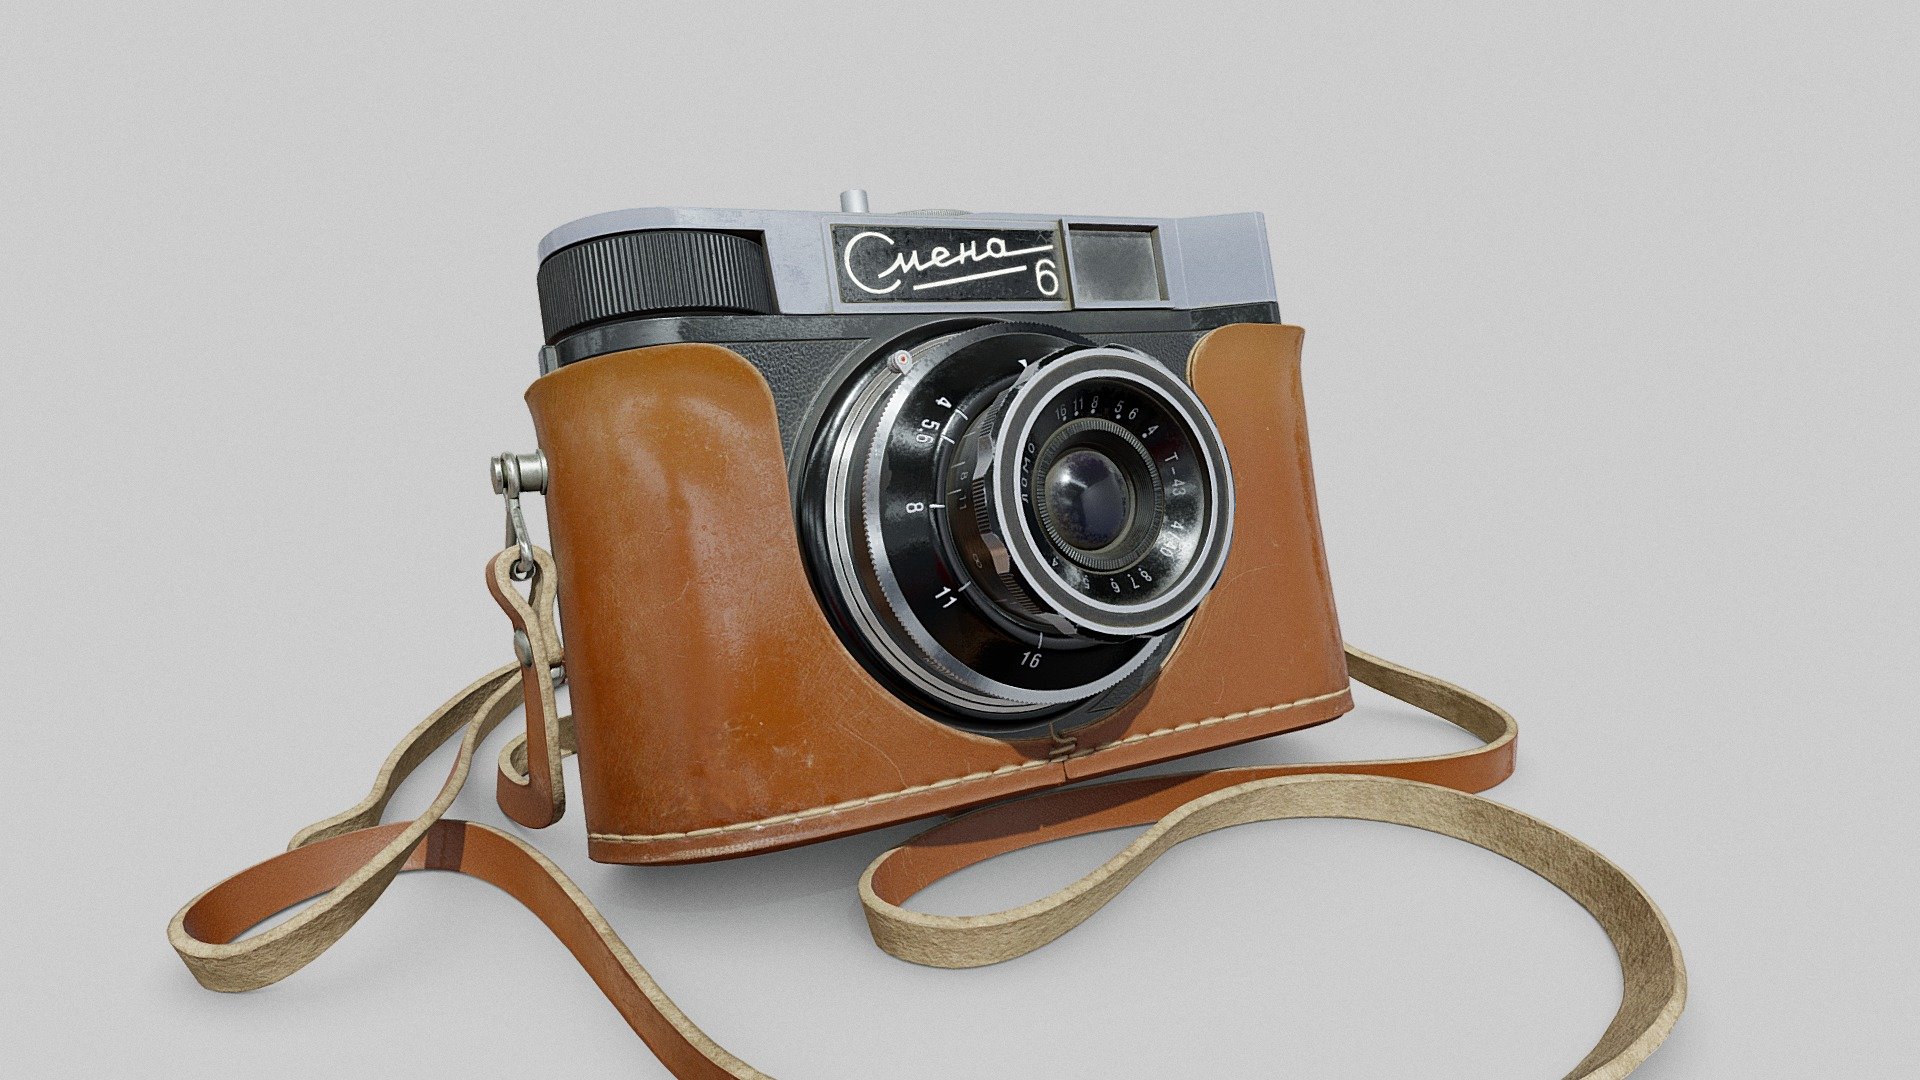 Camera Smena-6 (1961)
Reference modeling and texturing:
- Textures - 4k
- Tris - 45k

https://www.artstation.com/artwork/X1K8ga - Camera Smena-6 (1961) - 3D model by KasAndr 3d model